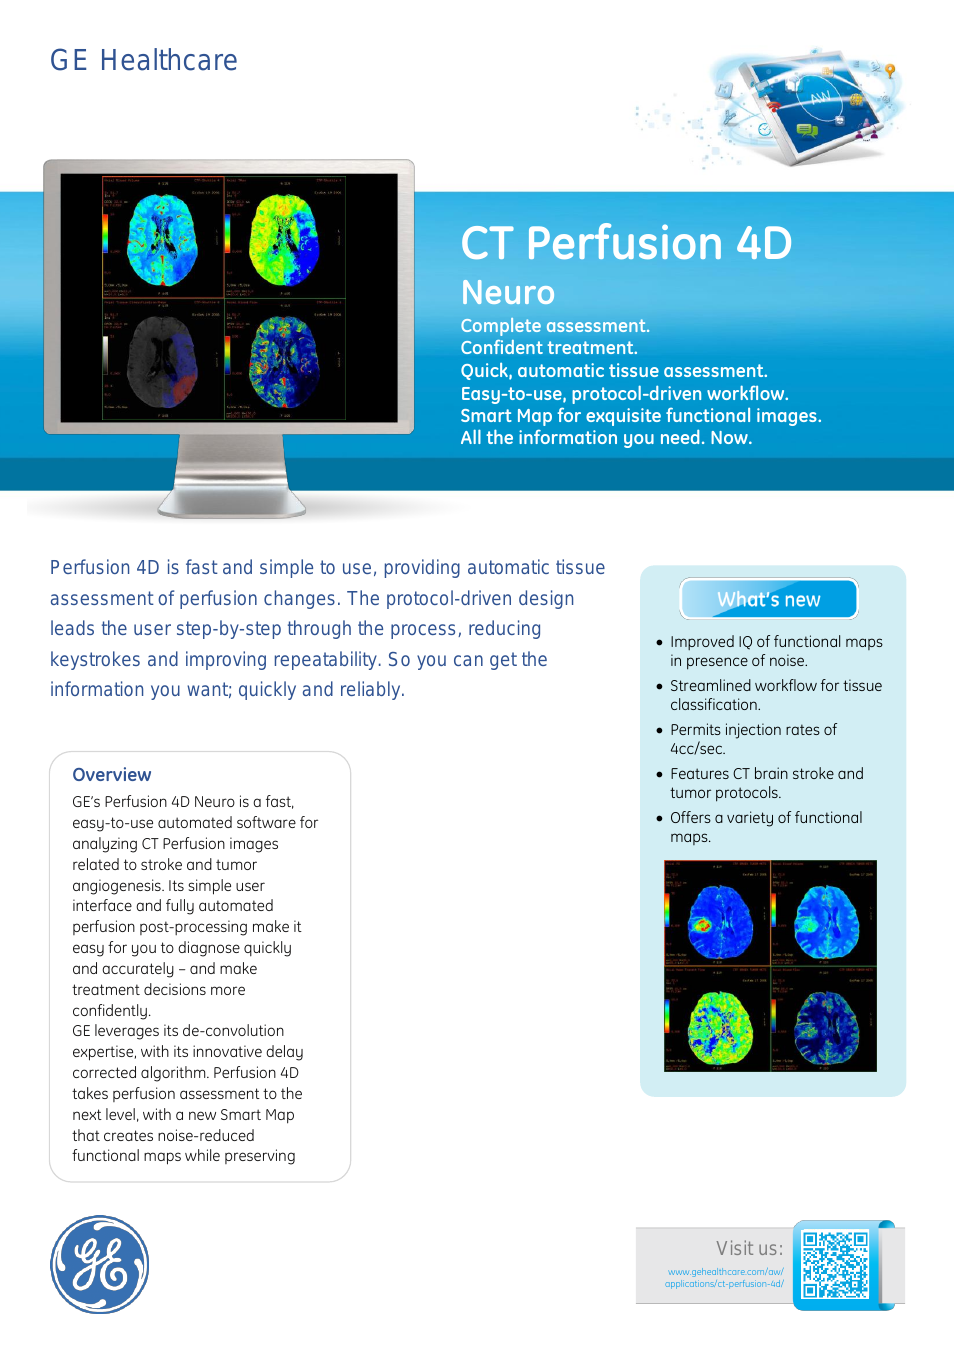 CT Perfusion 4D Neuro